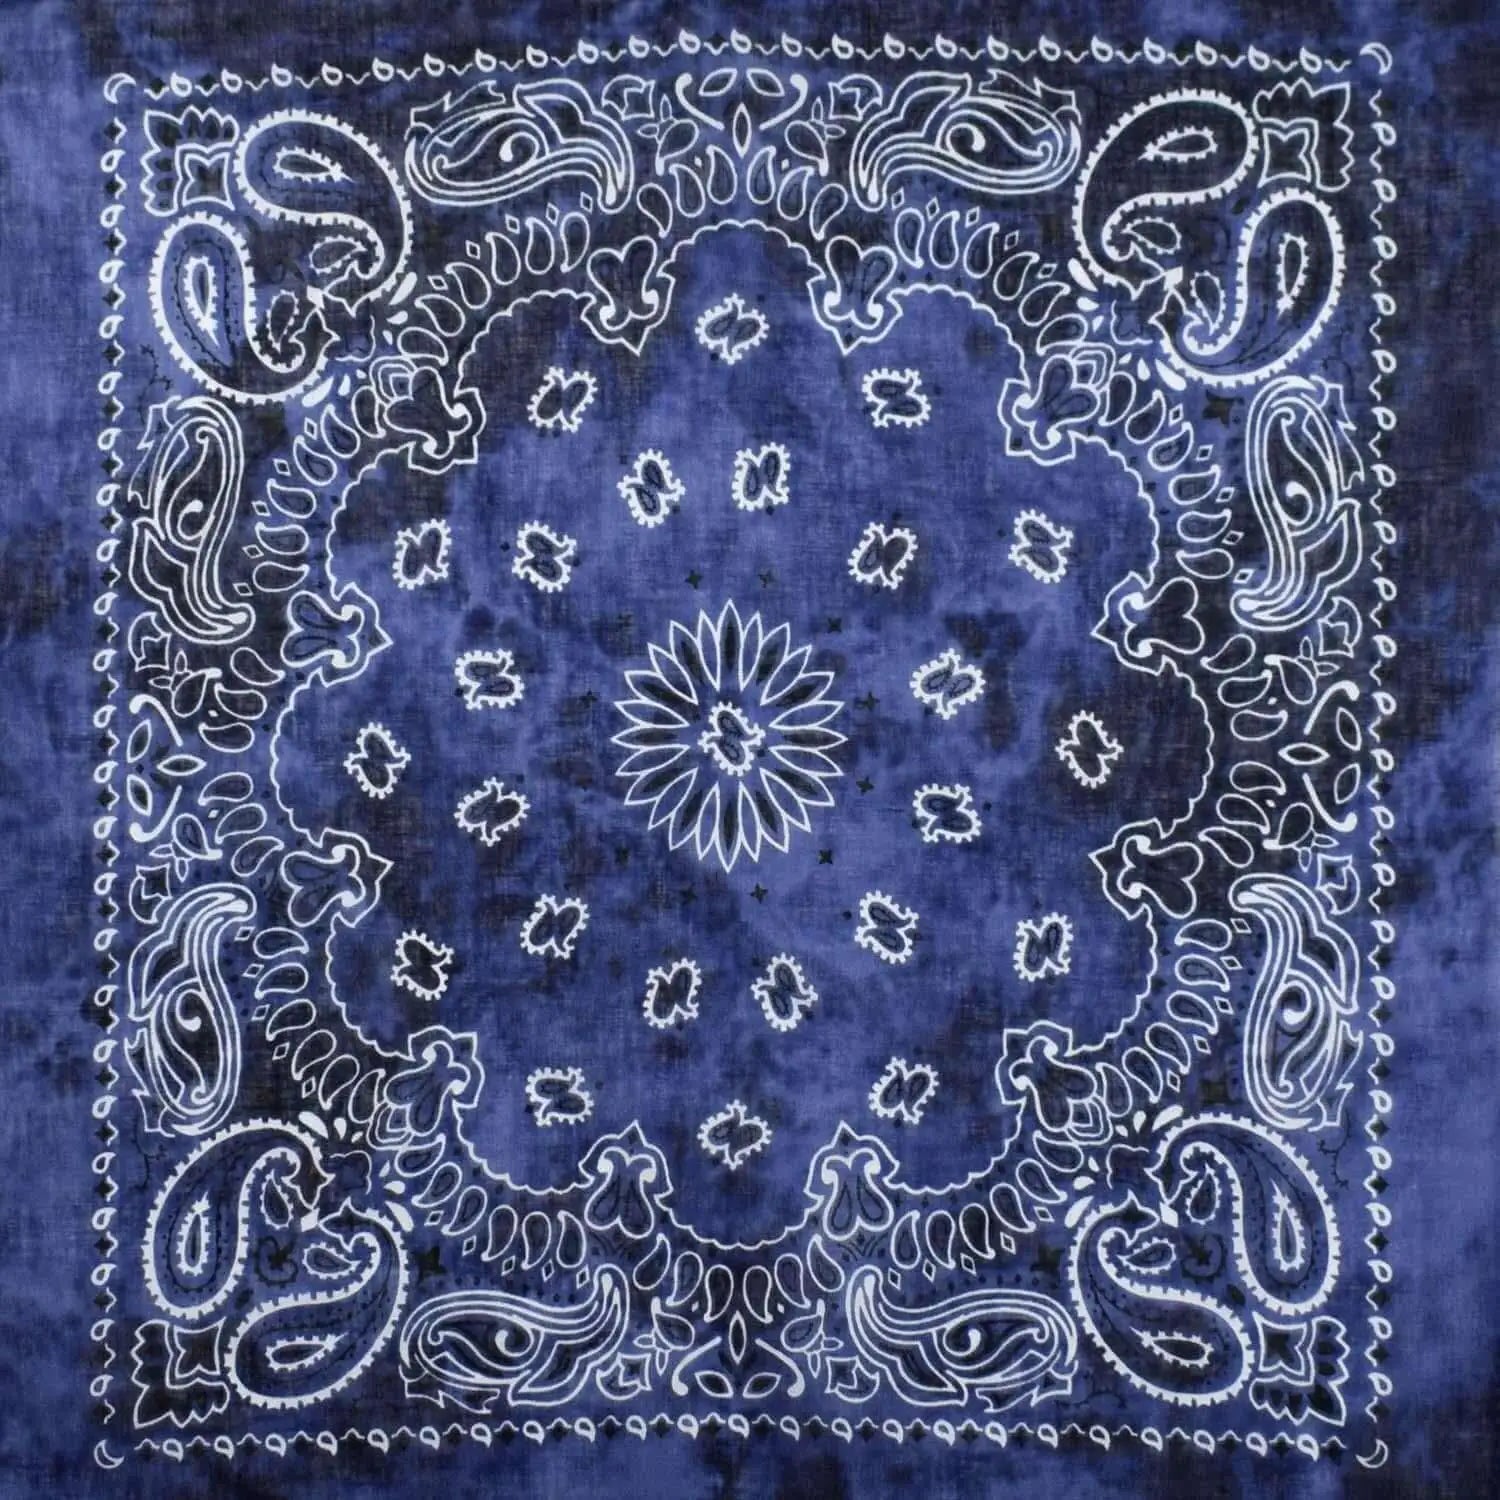 Blue tie dye paisley bandana in 100% cotton fabric